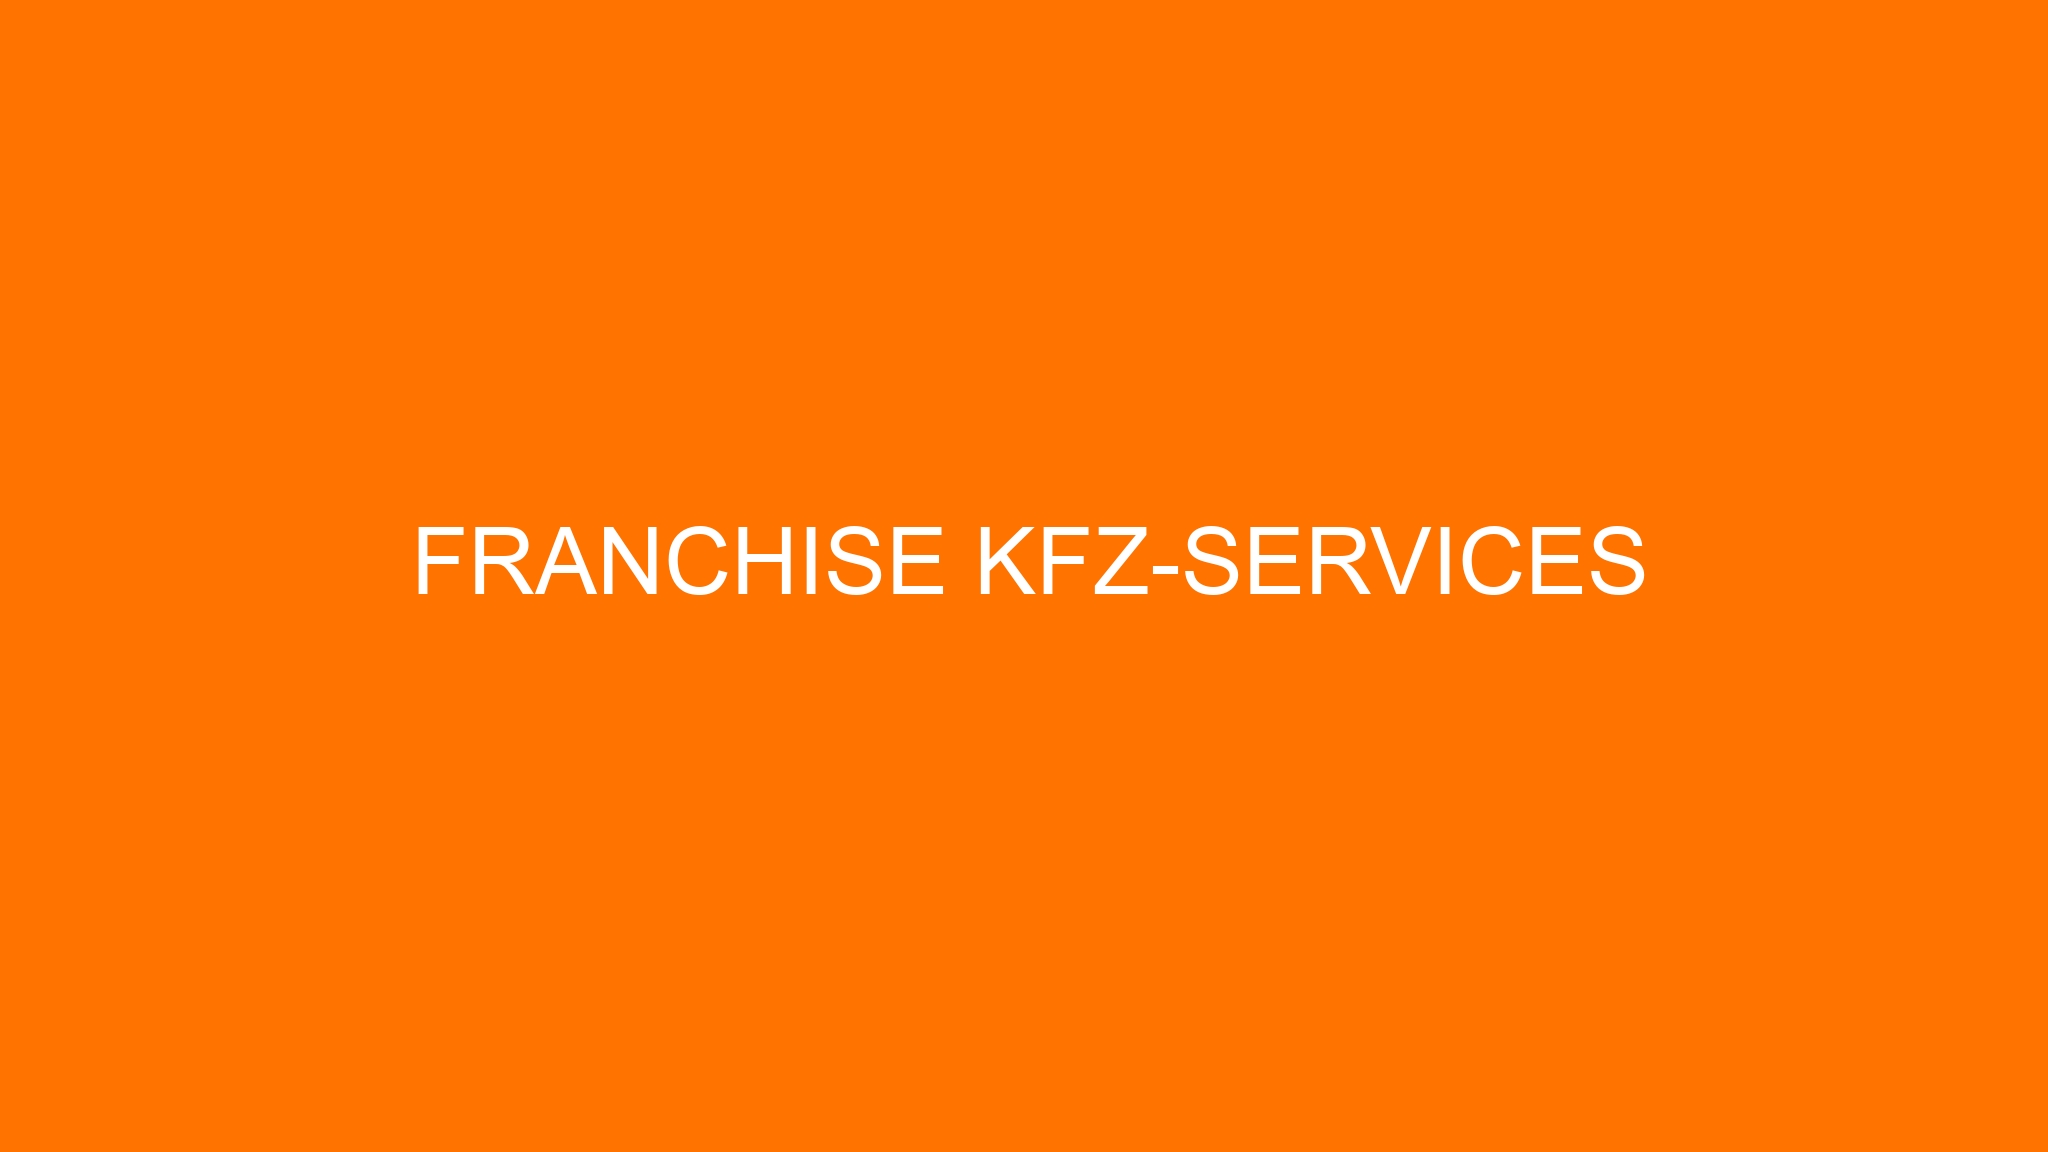 Franchise KFZ-Services